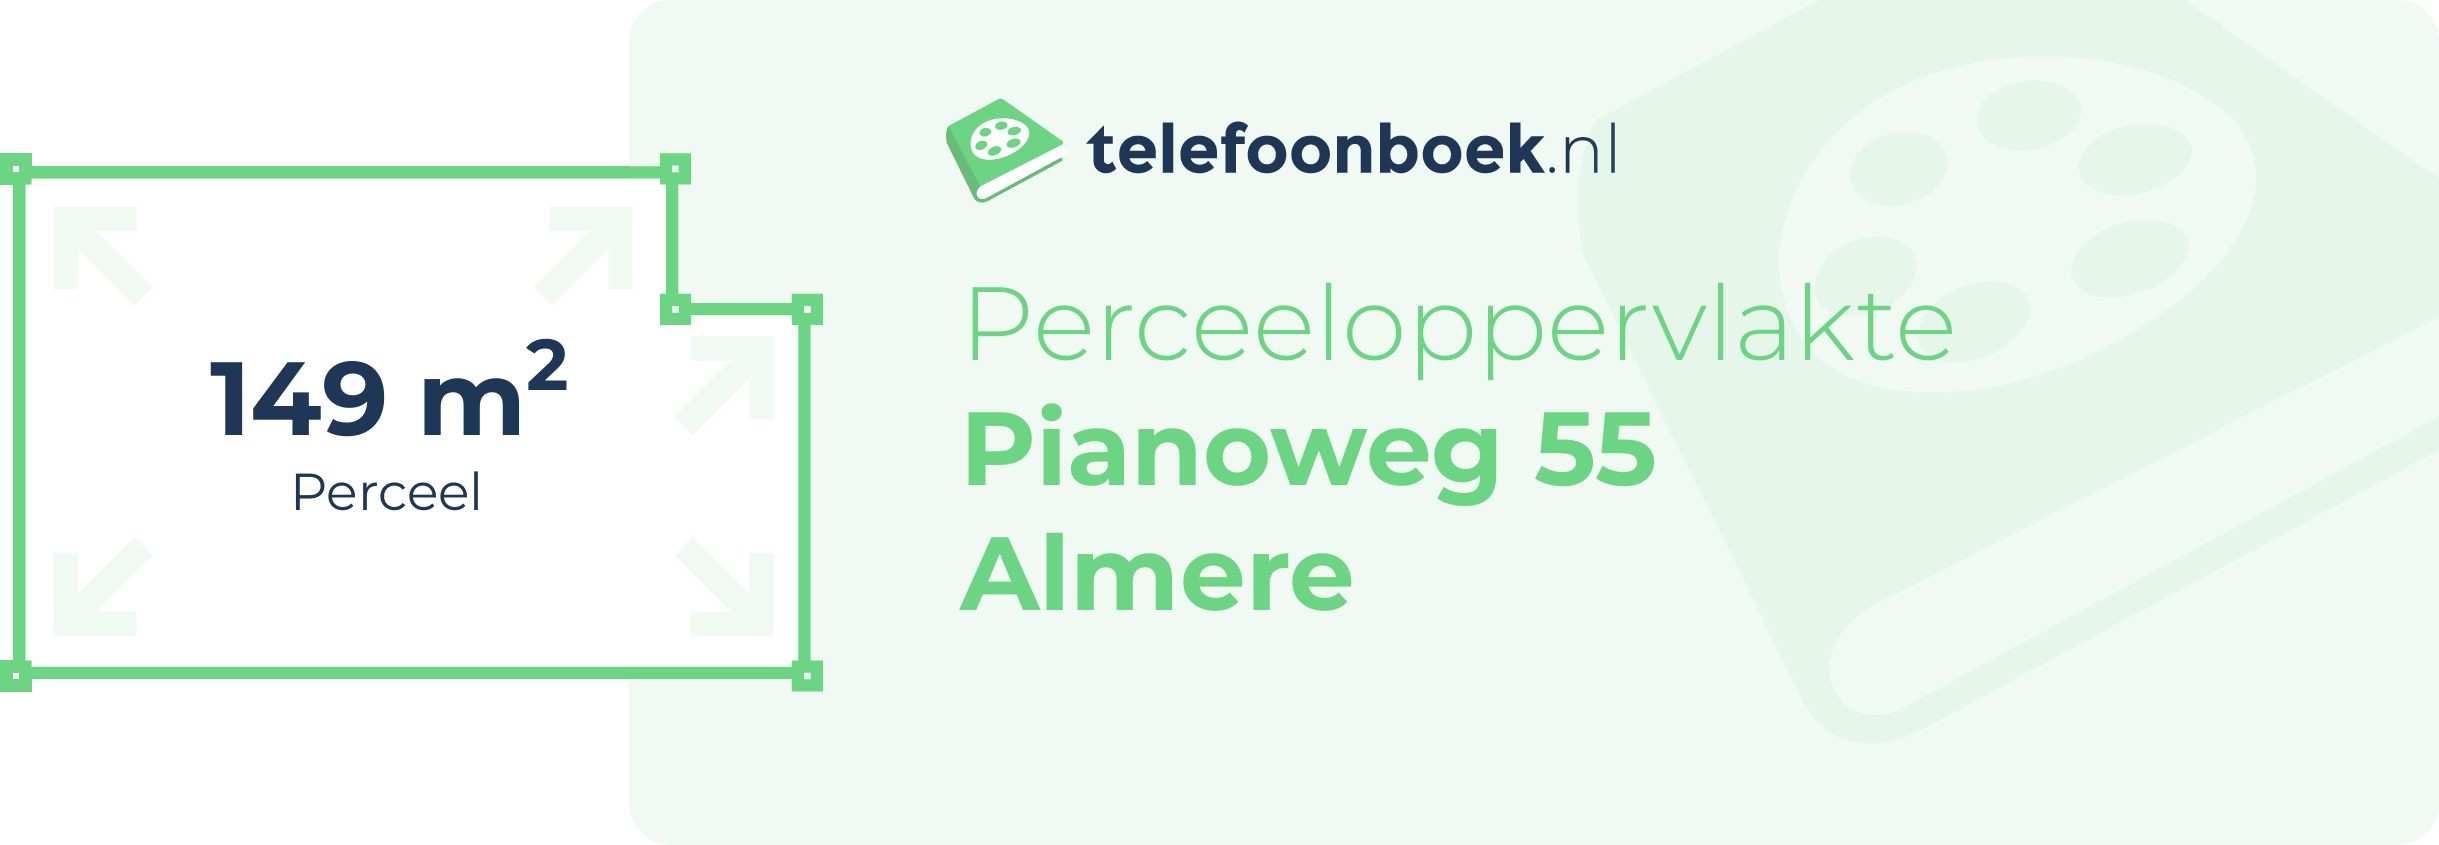 Perceeloppervlakte Pianoweg 55 Almere